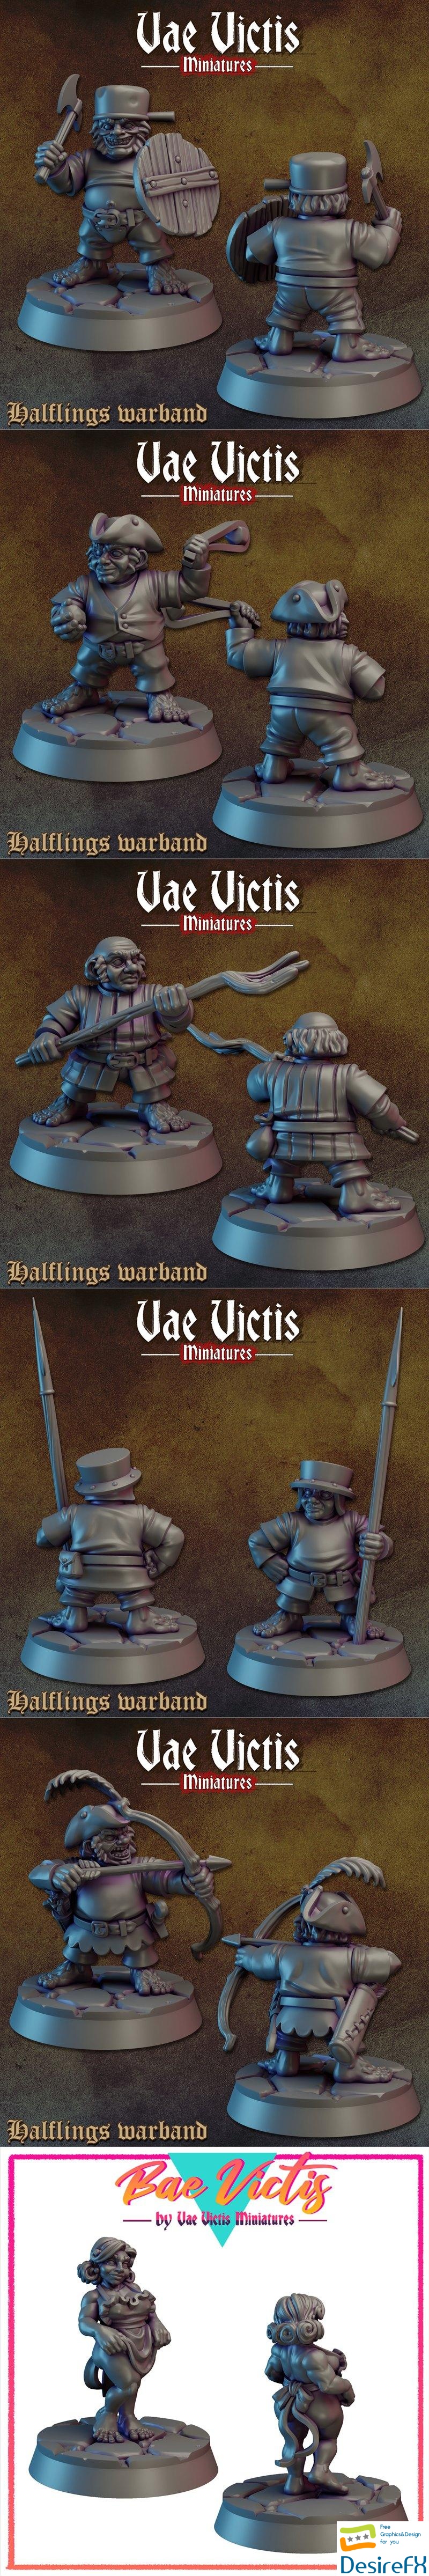 Vae Victis Miniatures - Halfling Warband January 2024 3D Print